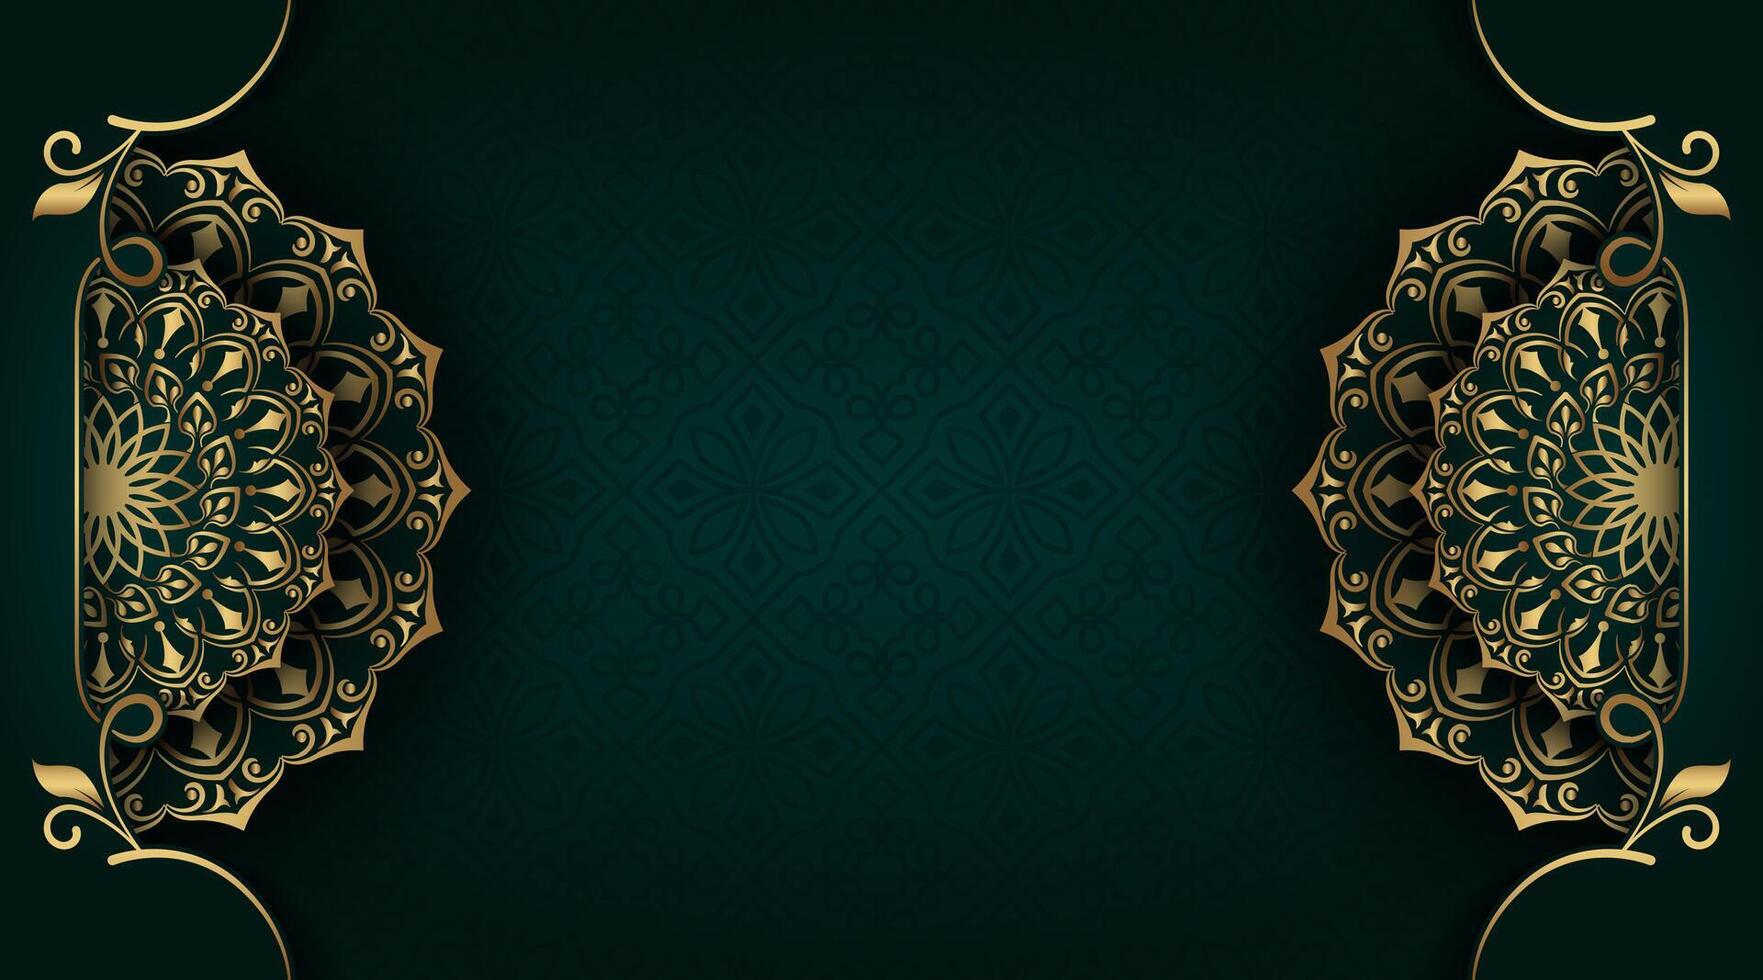 dunkel Grün Hintergrund mit Gold Mandala Ornament vektor